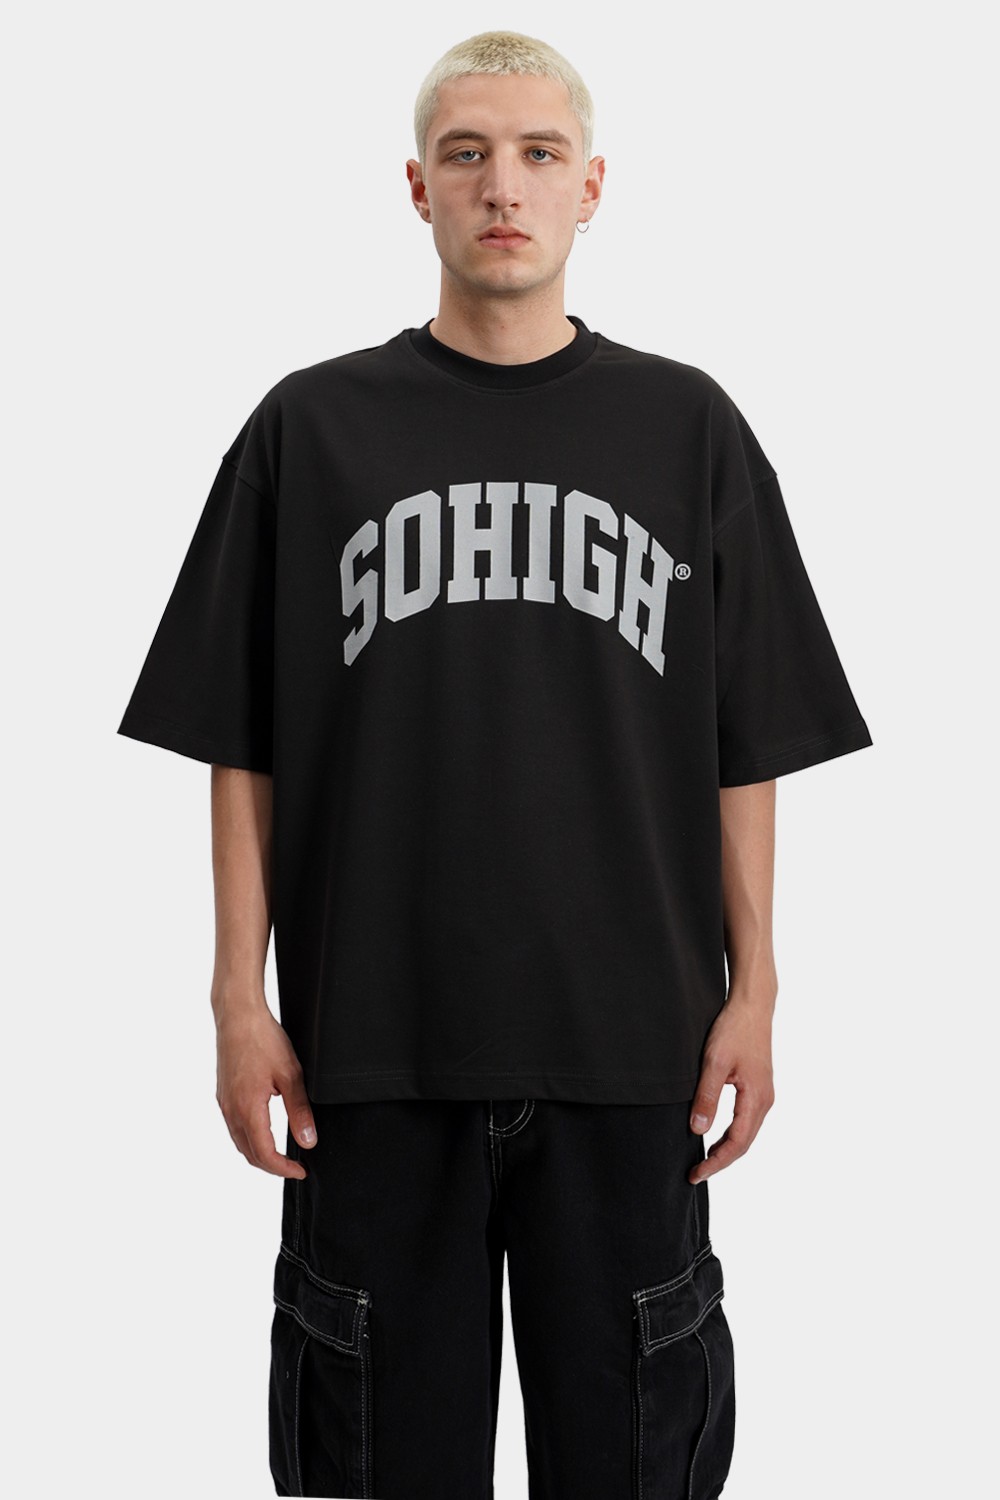 Sohigh College Logo T-Shirt (SHT-11)